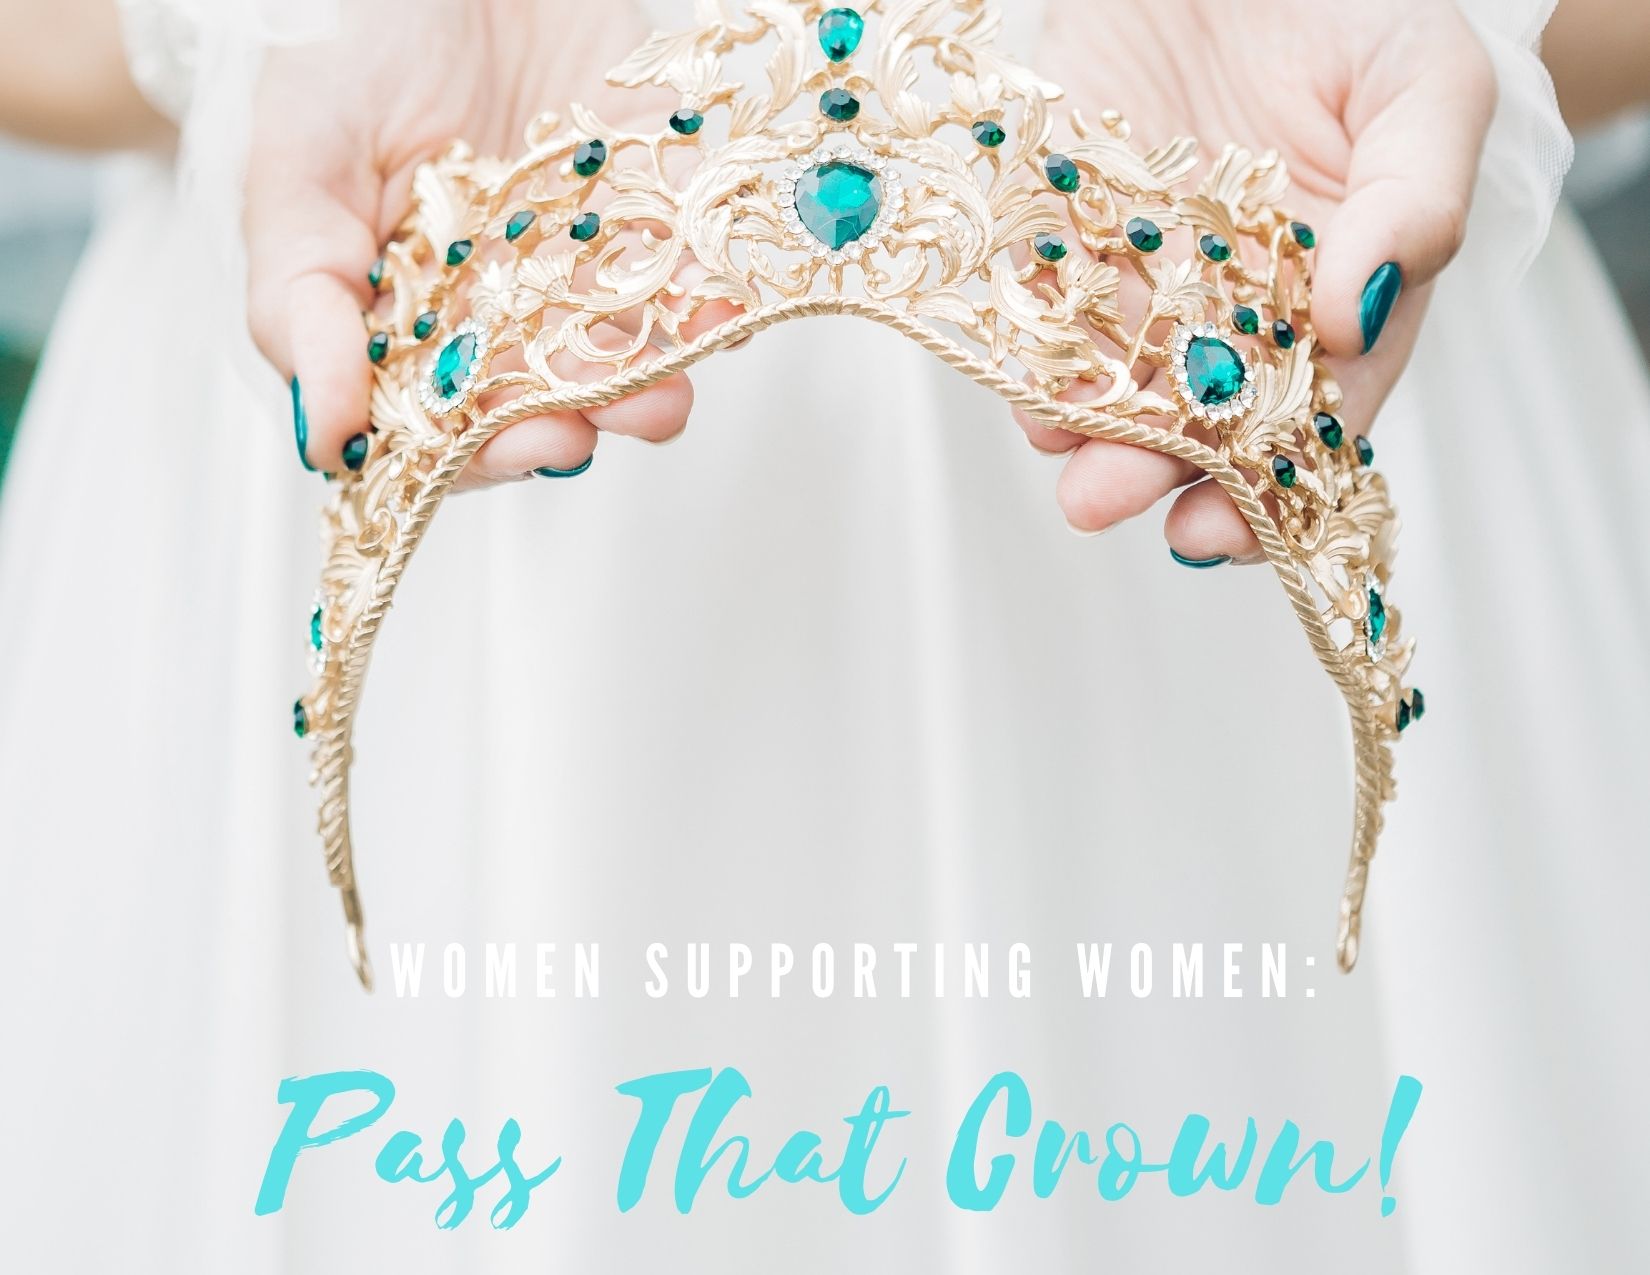 Women Supporting Women: Pass That Crown!